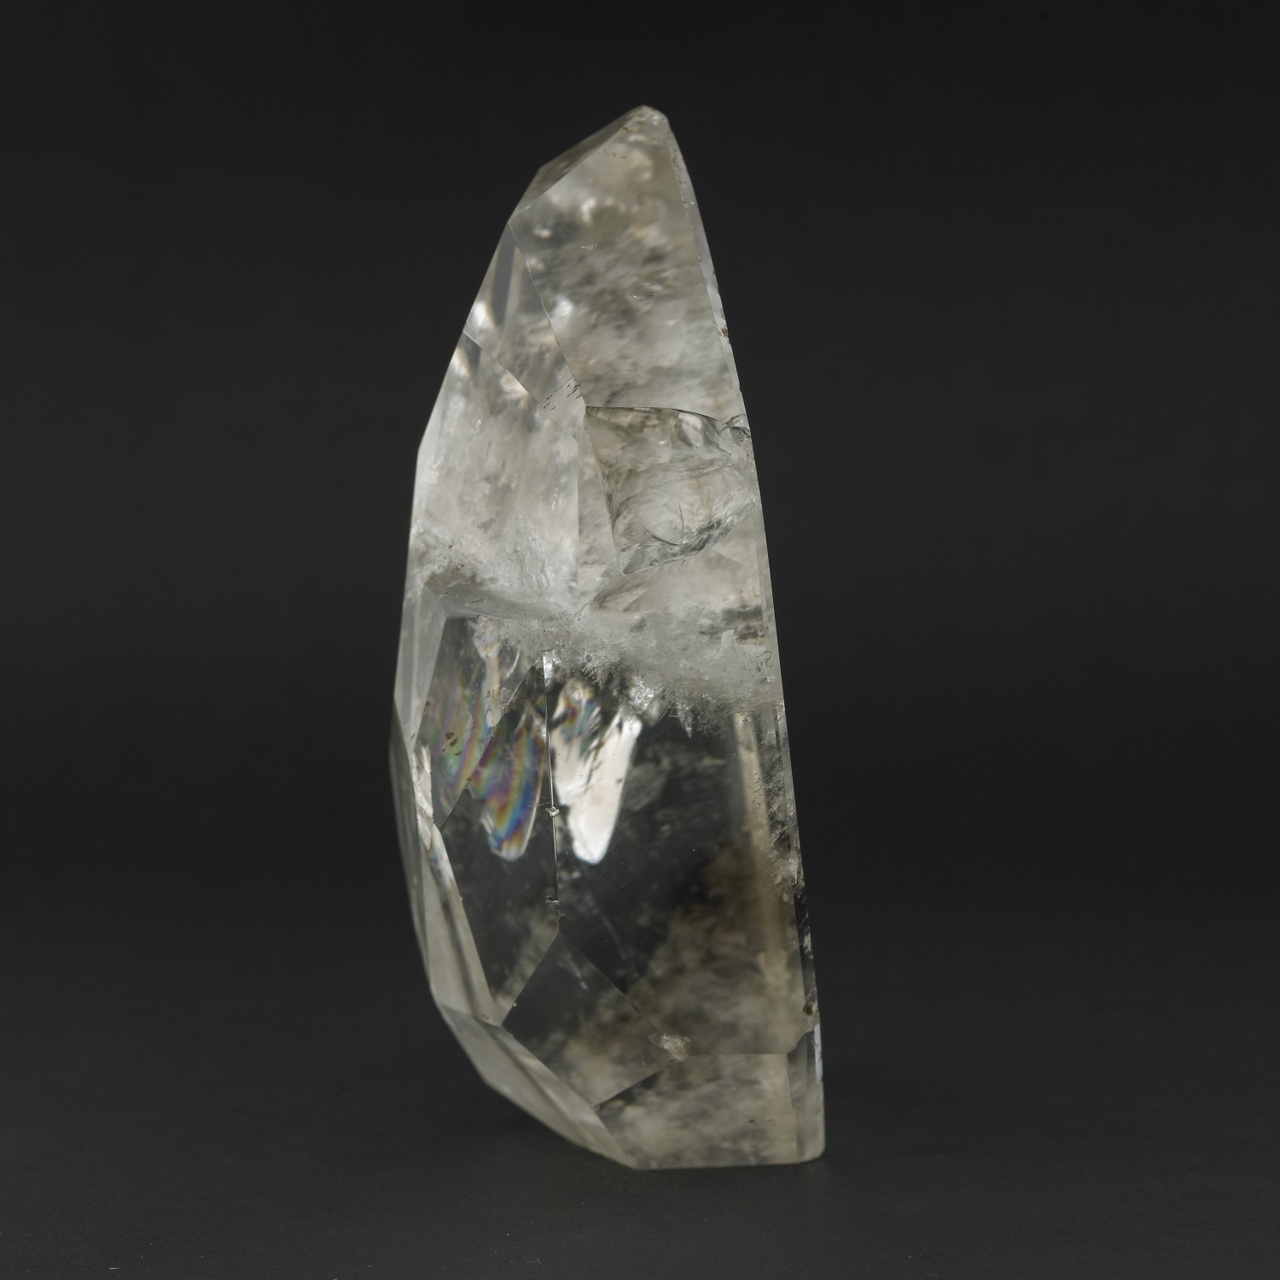 Bergkristal met 'healing crack'